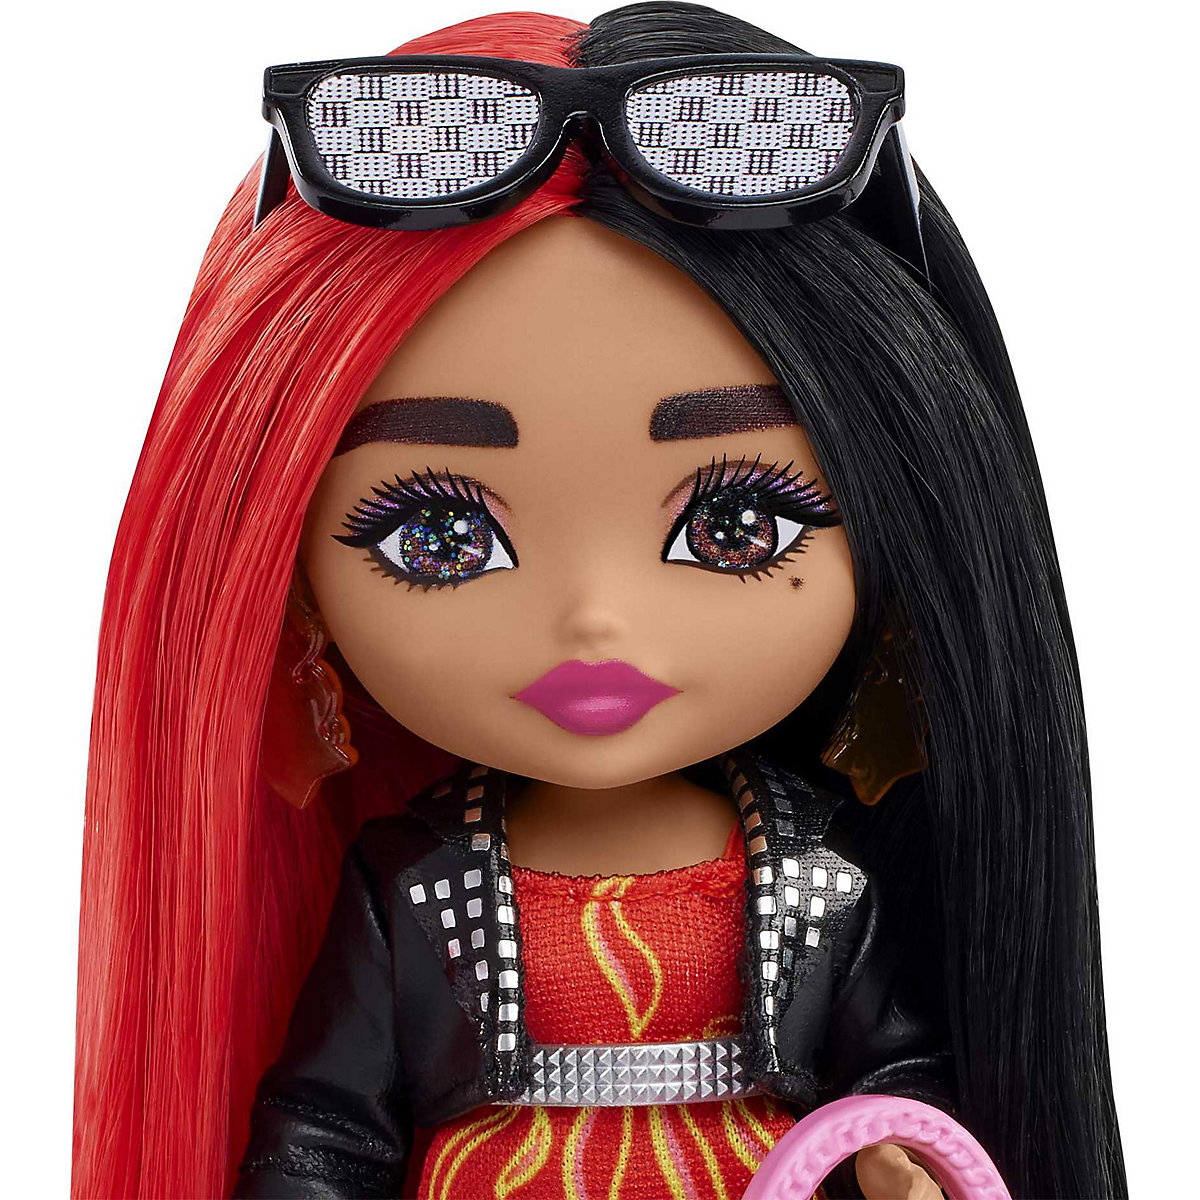 Barbie Extra Mini Doll Red/Black Hair